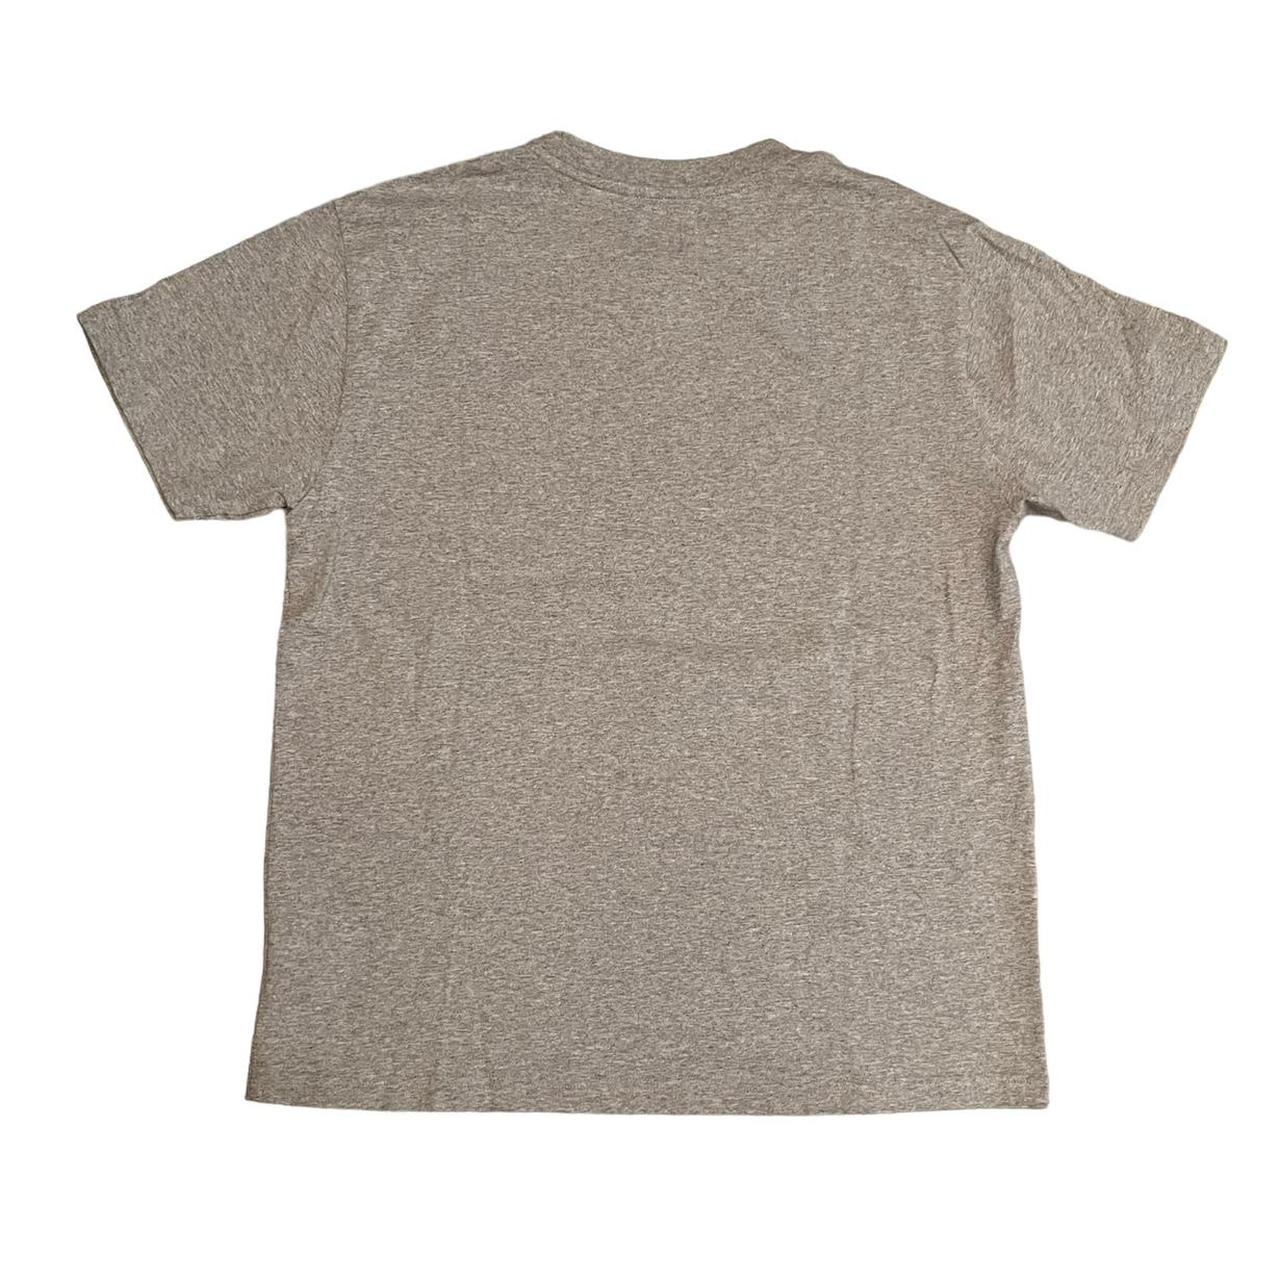 New Balance Men's Black and Grey T-shirt (6)